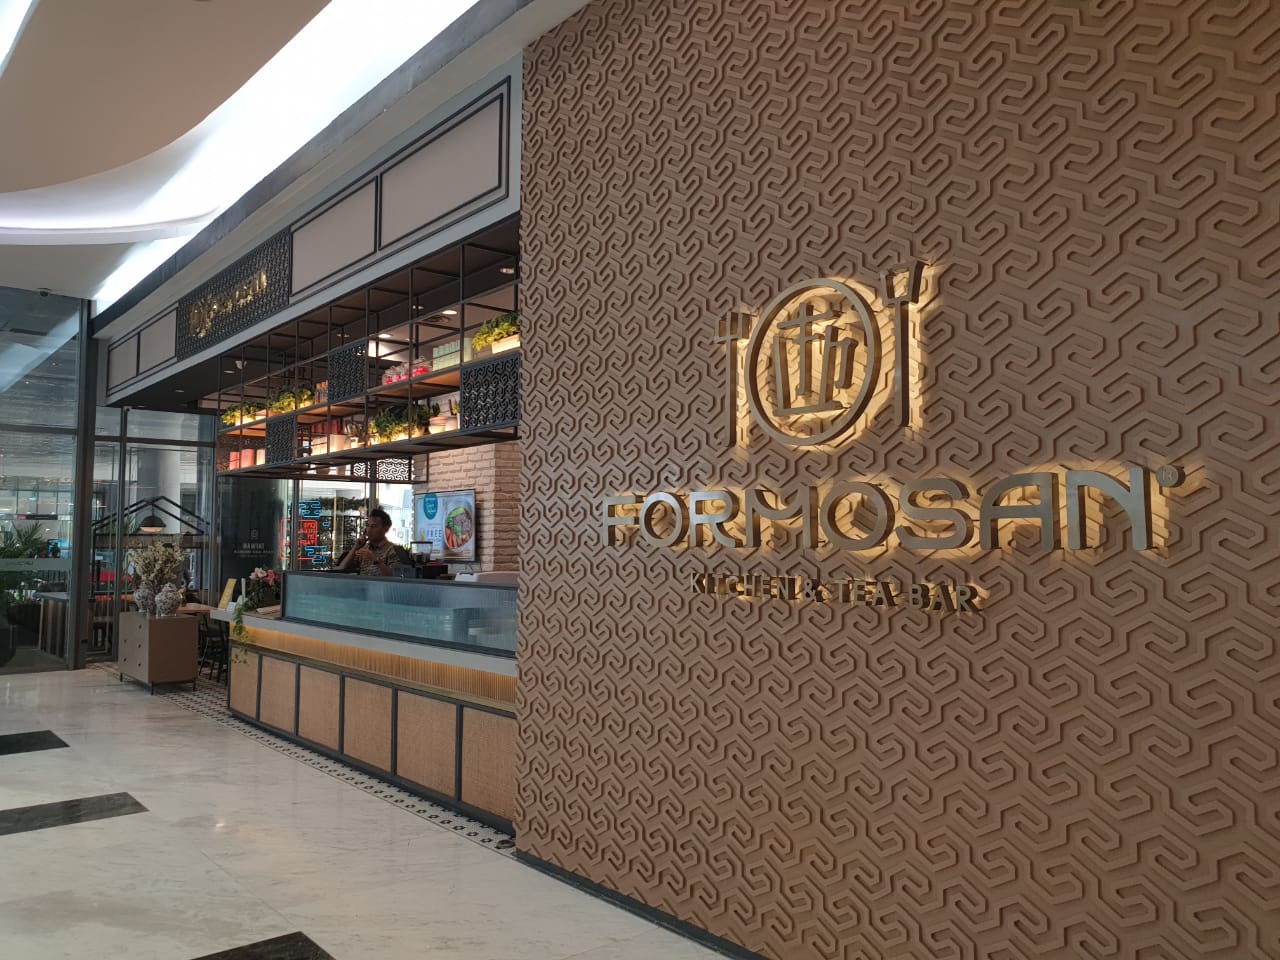 Formosan shop front in lippo mall puri st. moritz